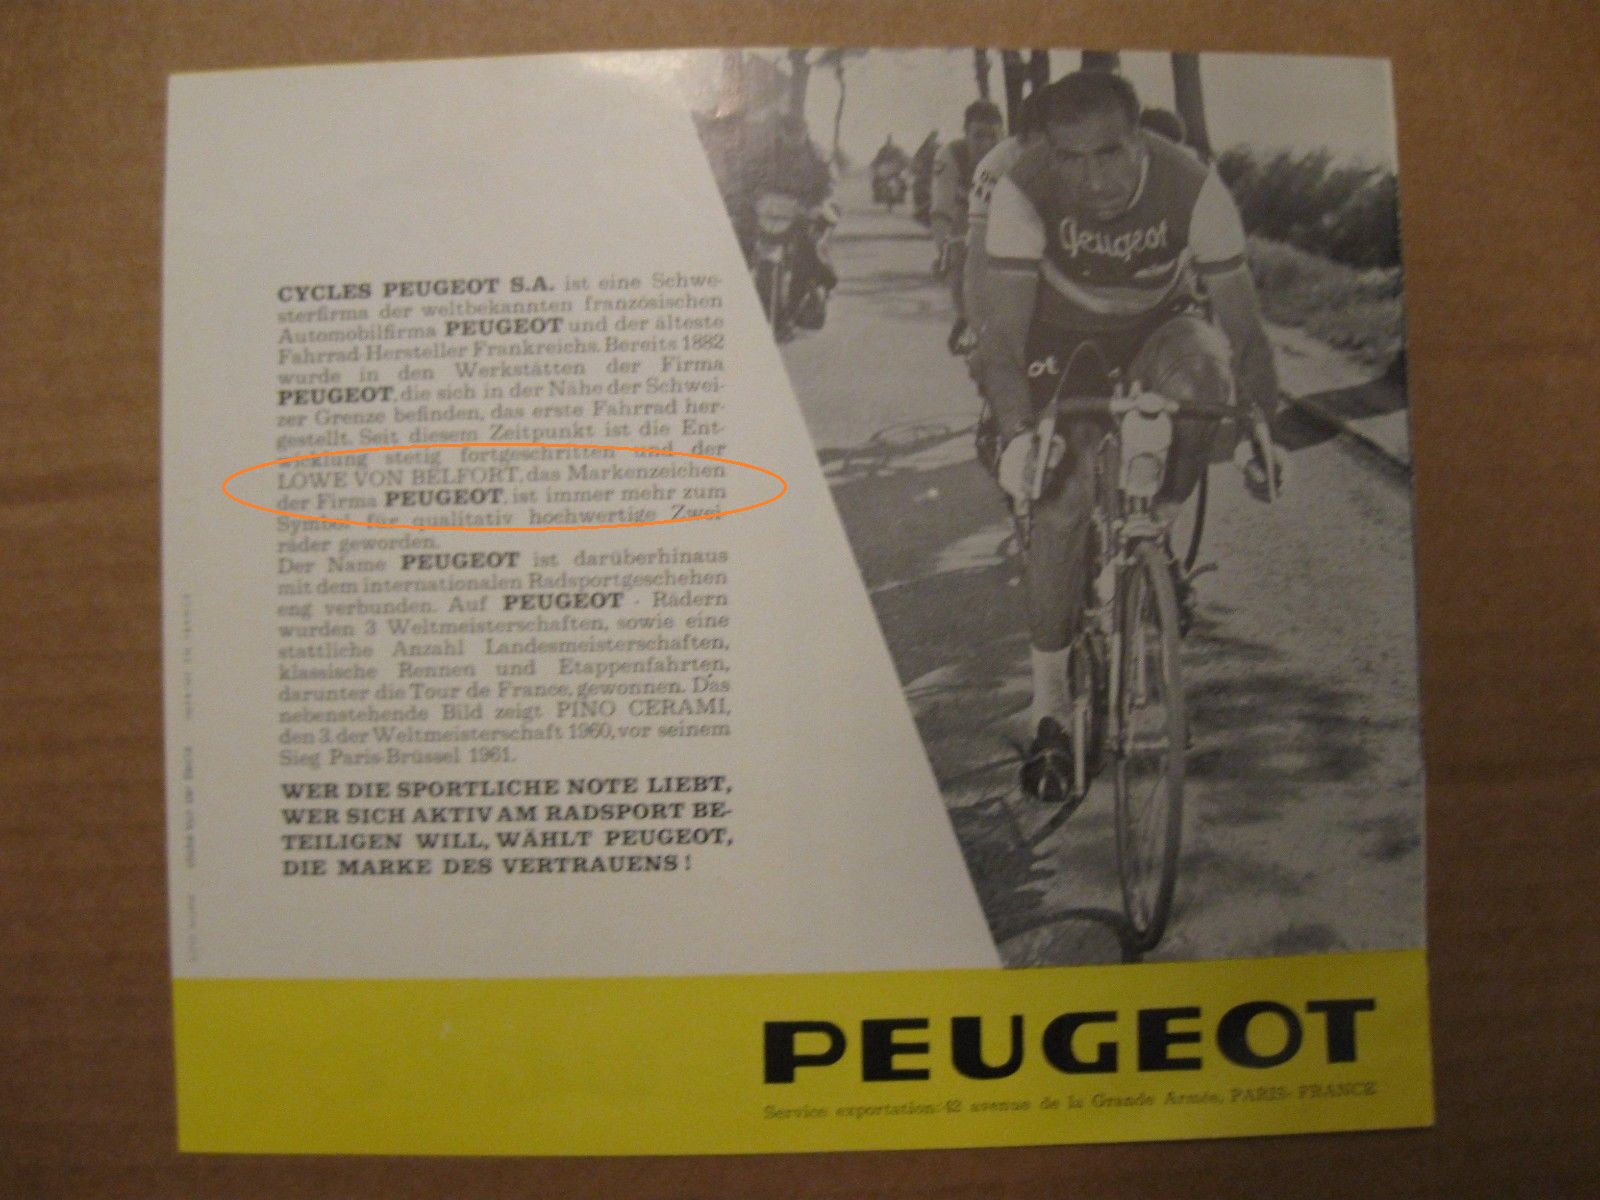 Peugeot oldadd 02a.jpg